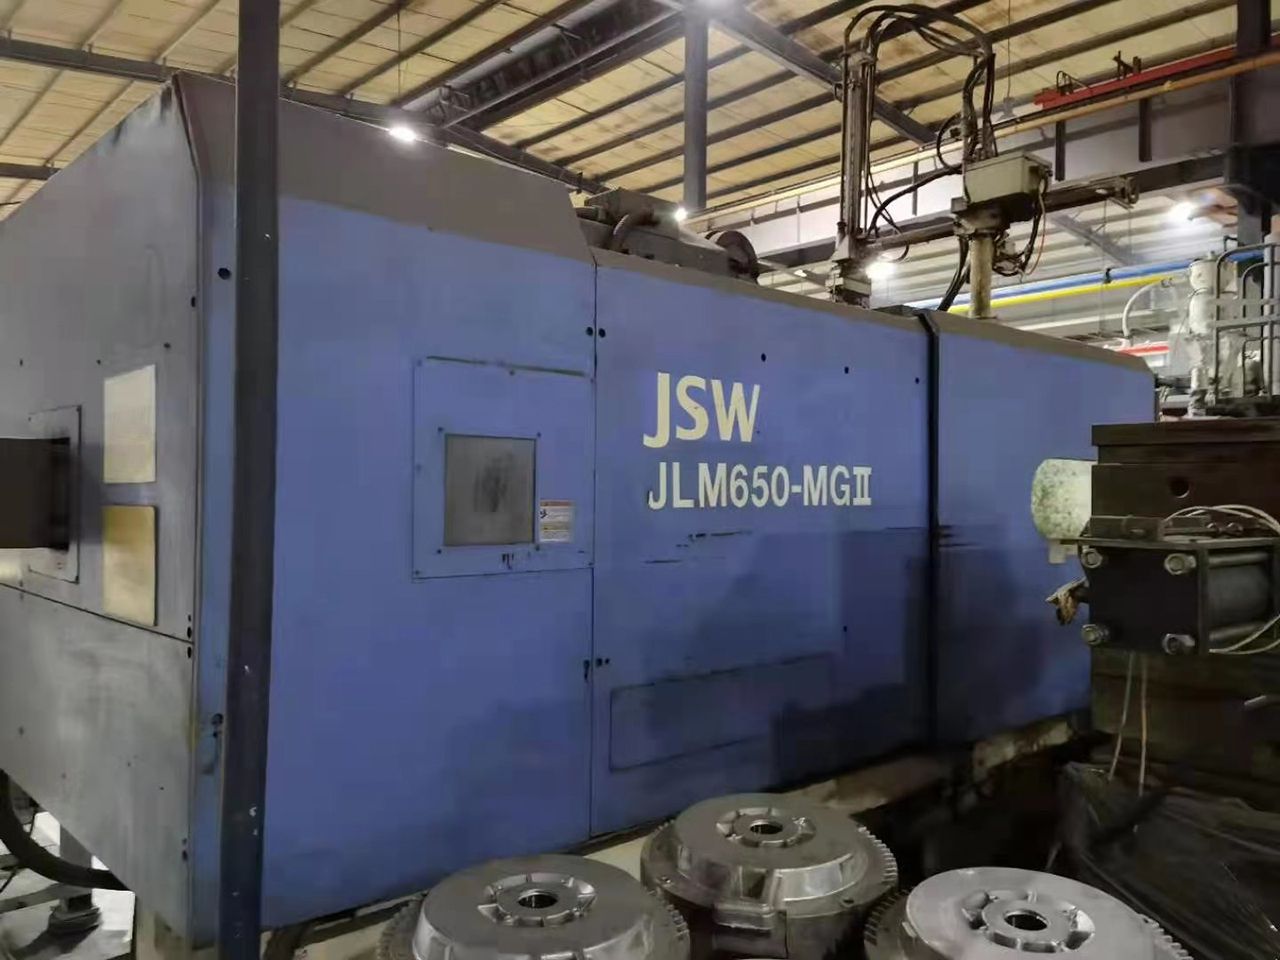 JSW JLM 650-MGII Magnesium Thixomolding machine WK1452, used